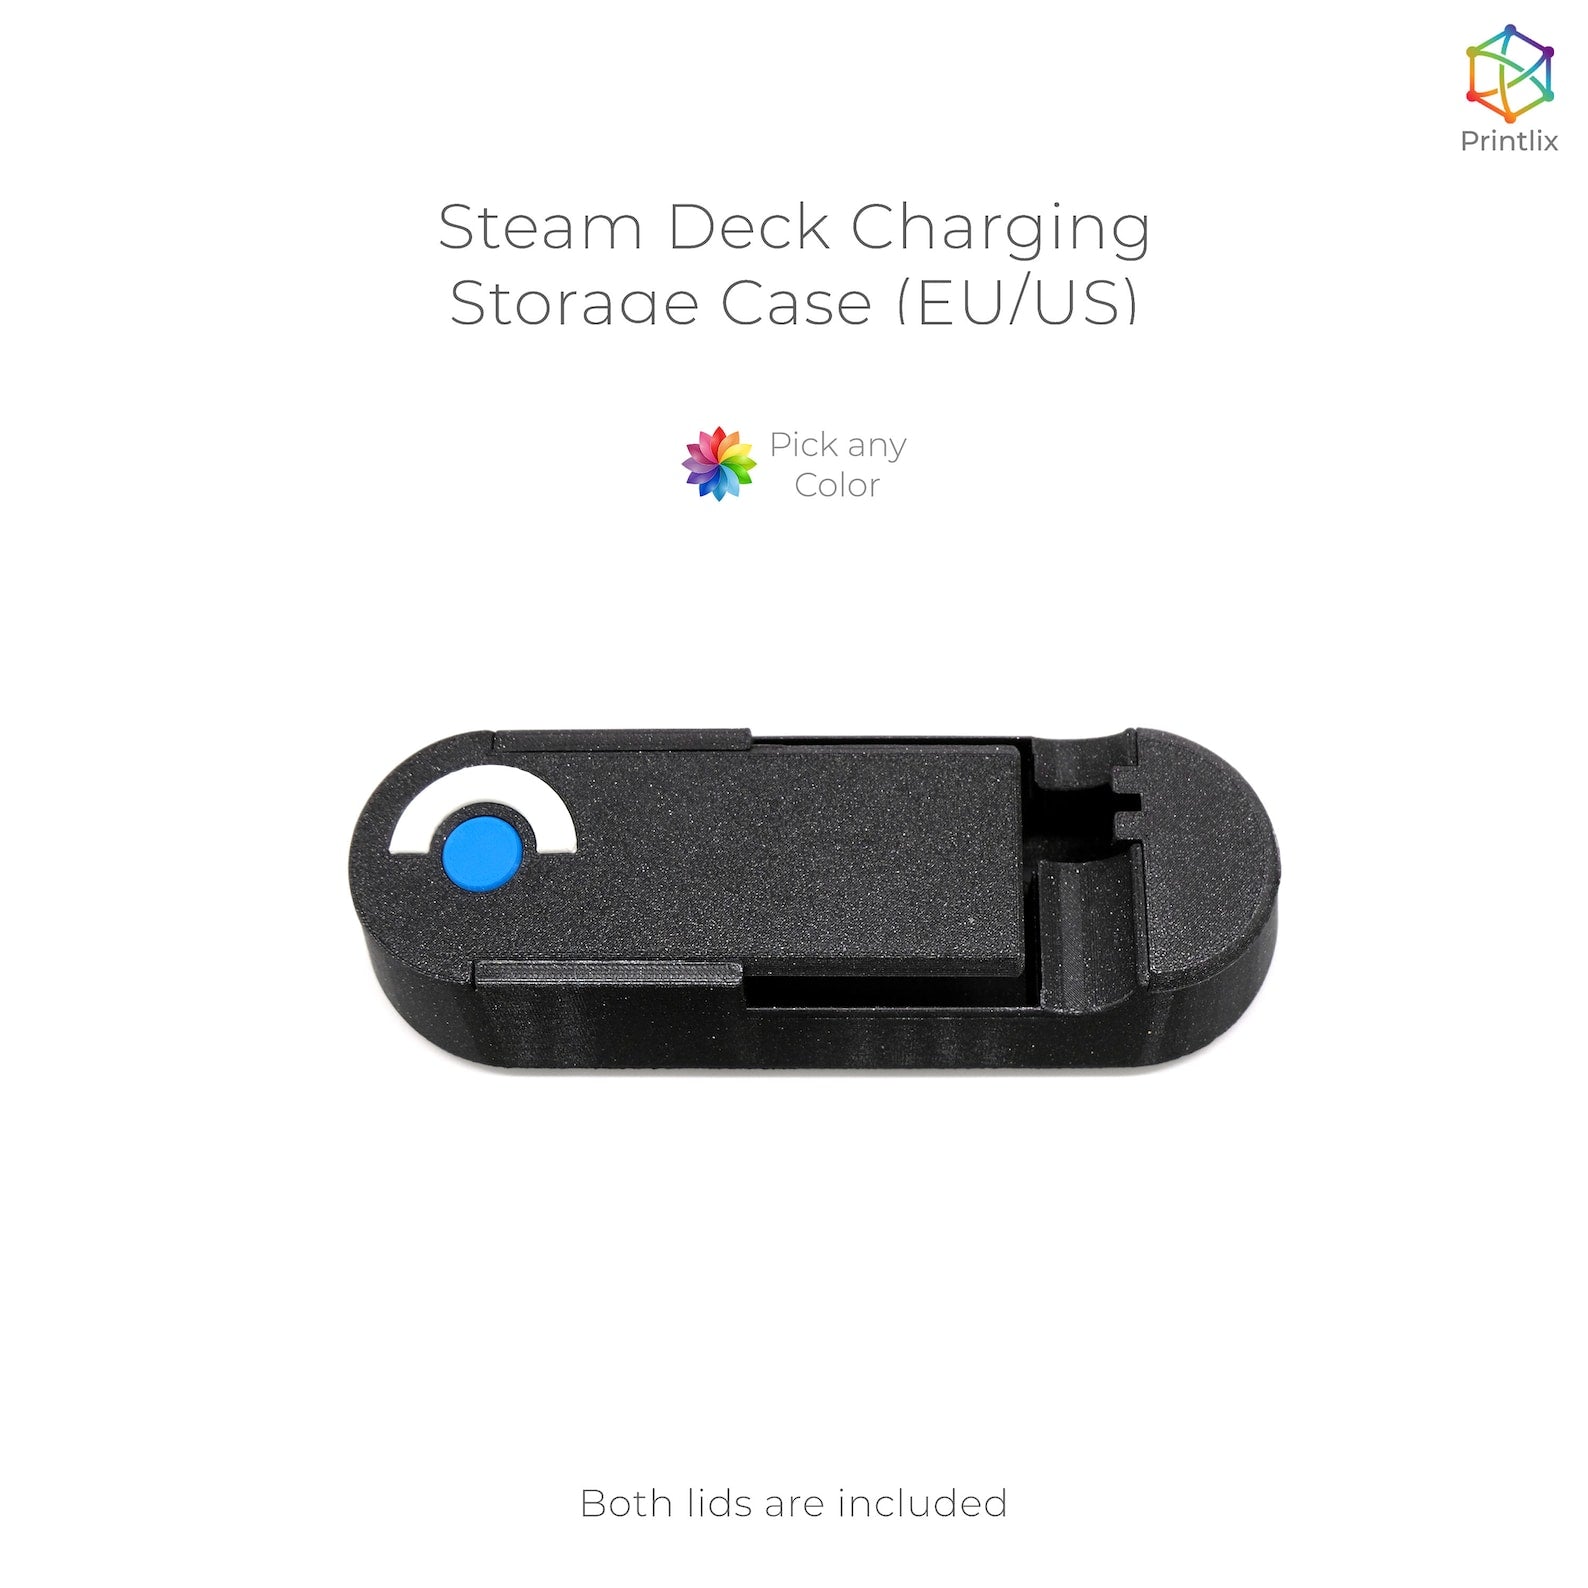 Valve Steam Deck Charging Storage Case (EU/US) - 3D Printed